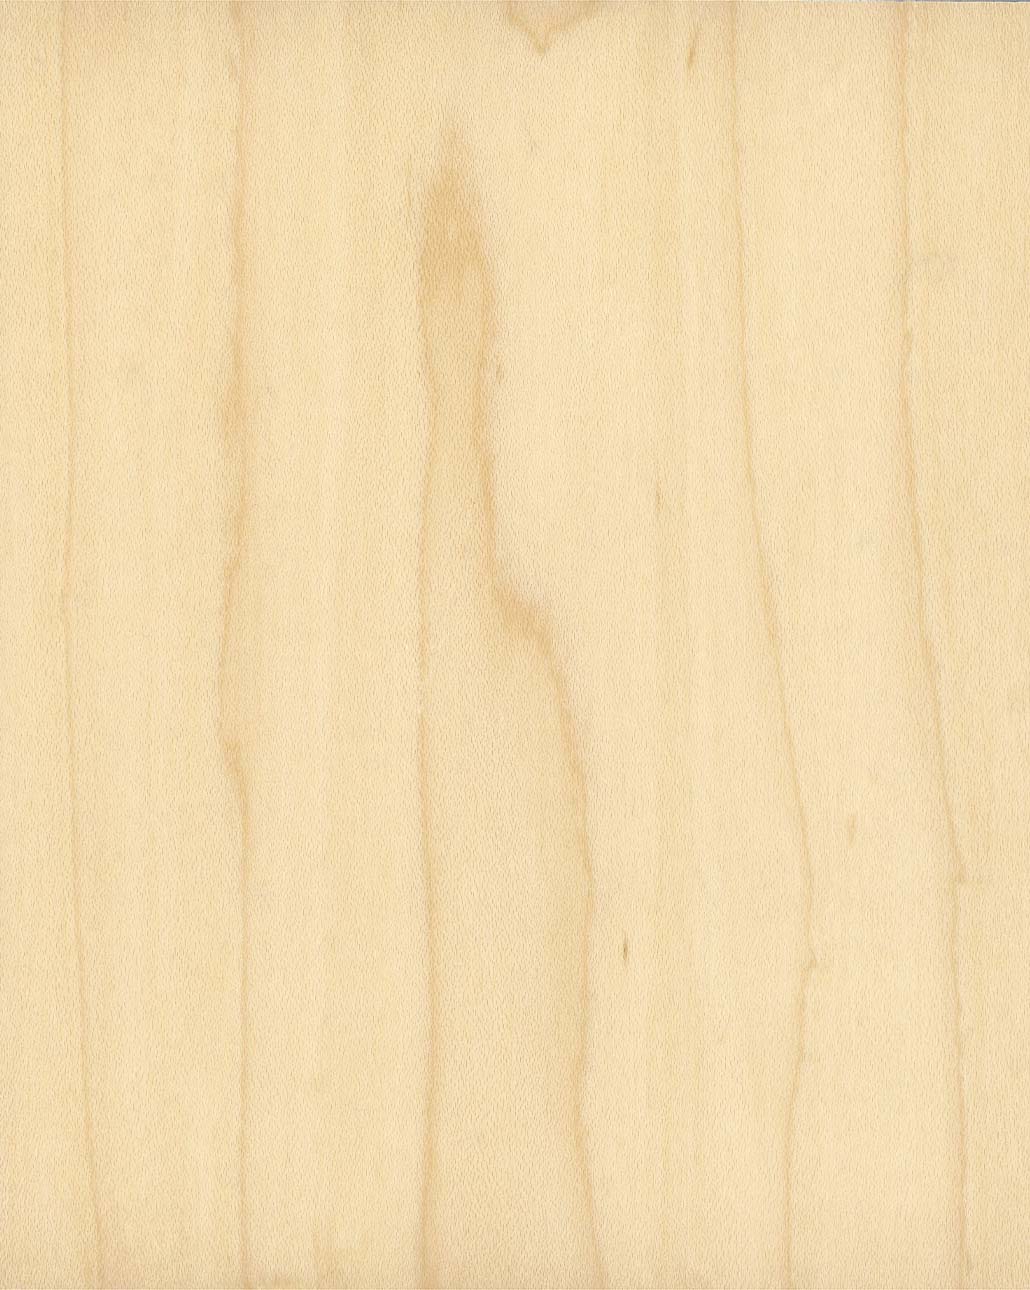 Maple veneer panel